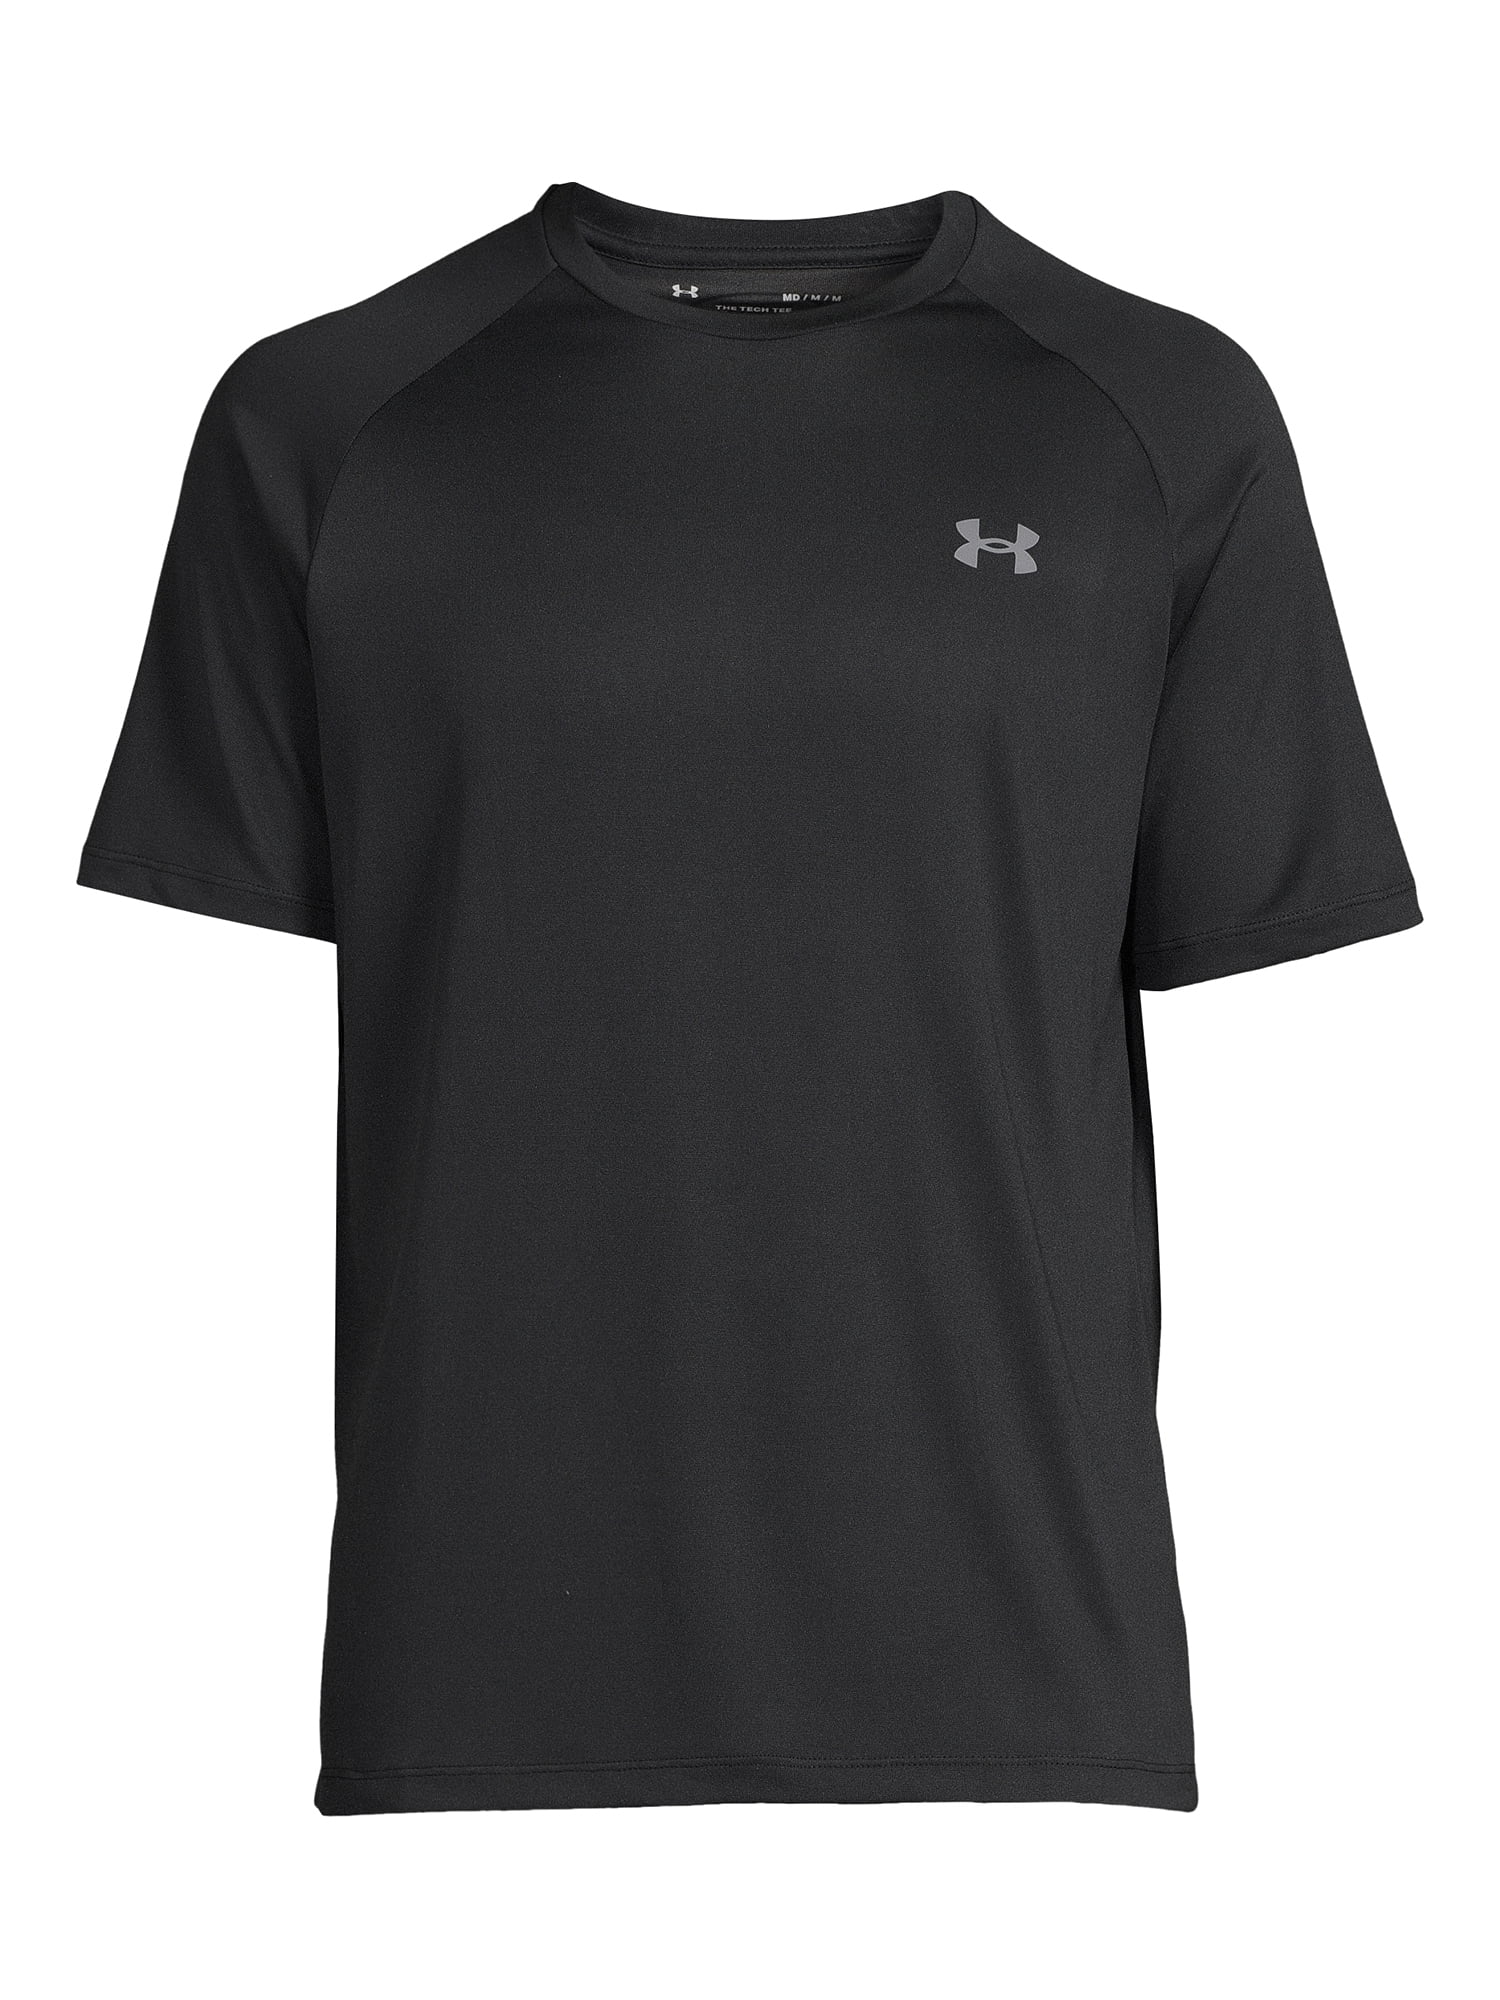 Under Armour Men's and Big Men's UA Tech 2.0 Short Sleeve T-Shirt, Sizes  S-2XL